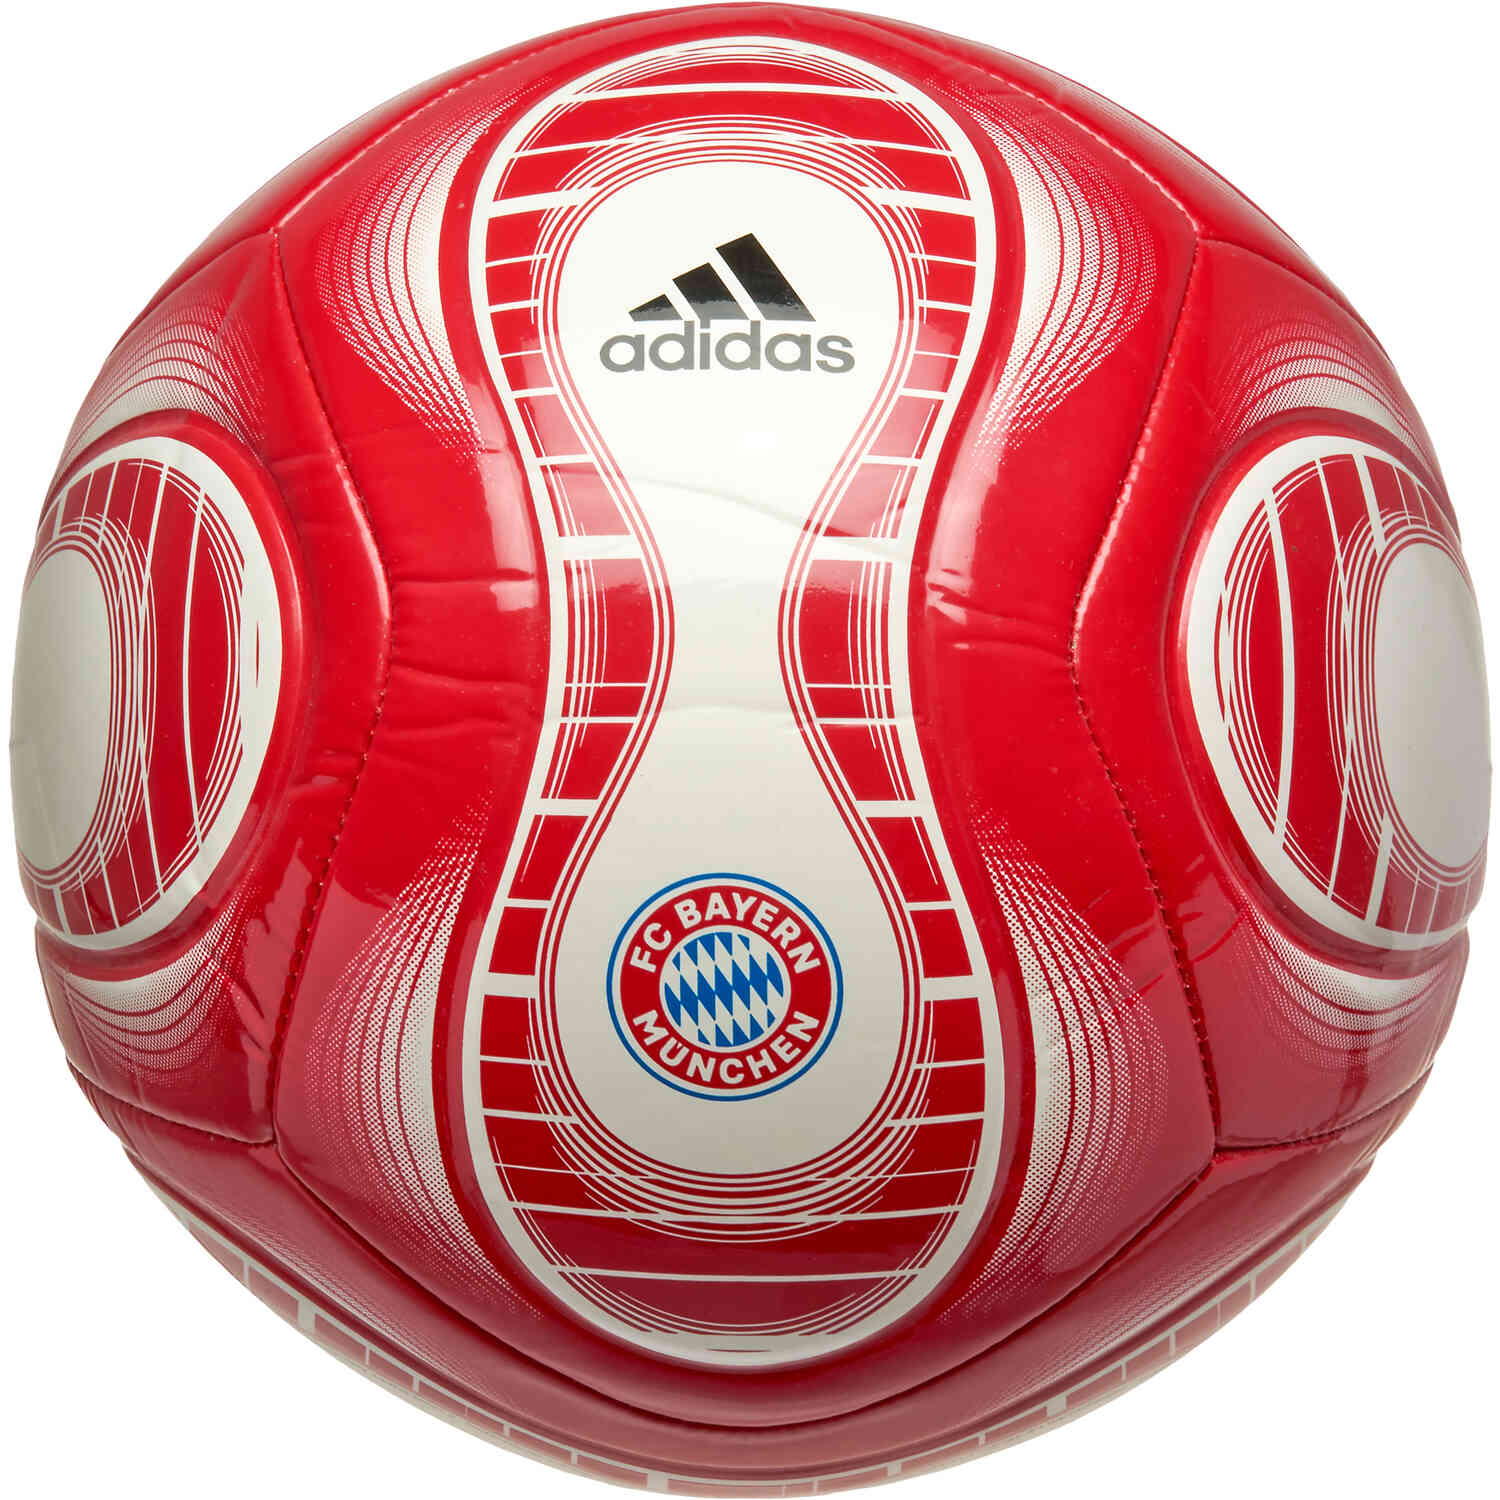 adidas Bayern Munich Teamgeist Club Practice Soccer Ball - Red & White with  Black - Soccer Master